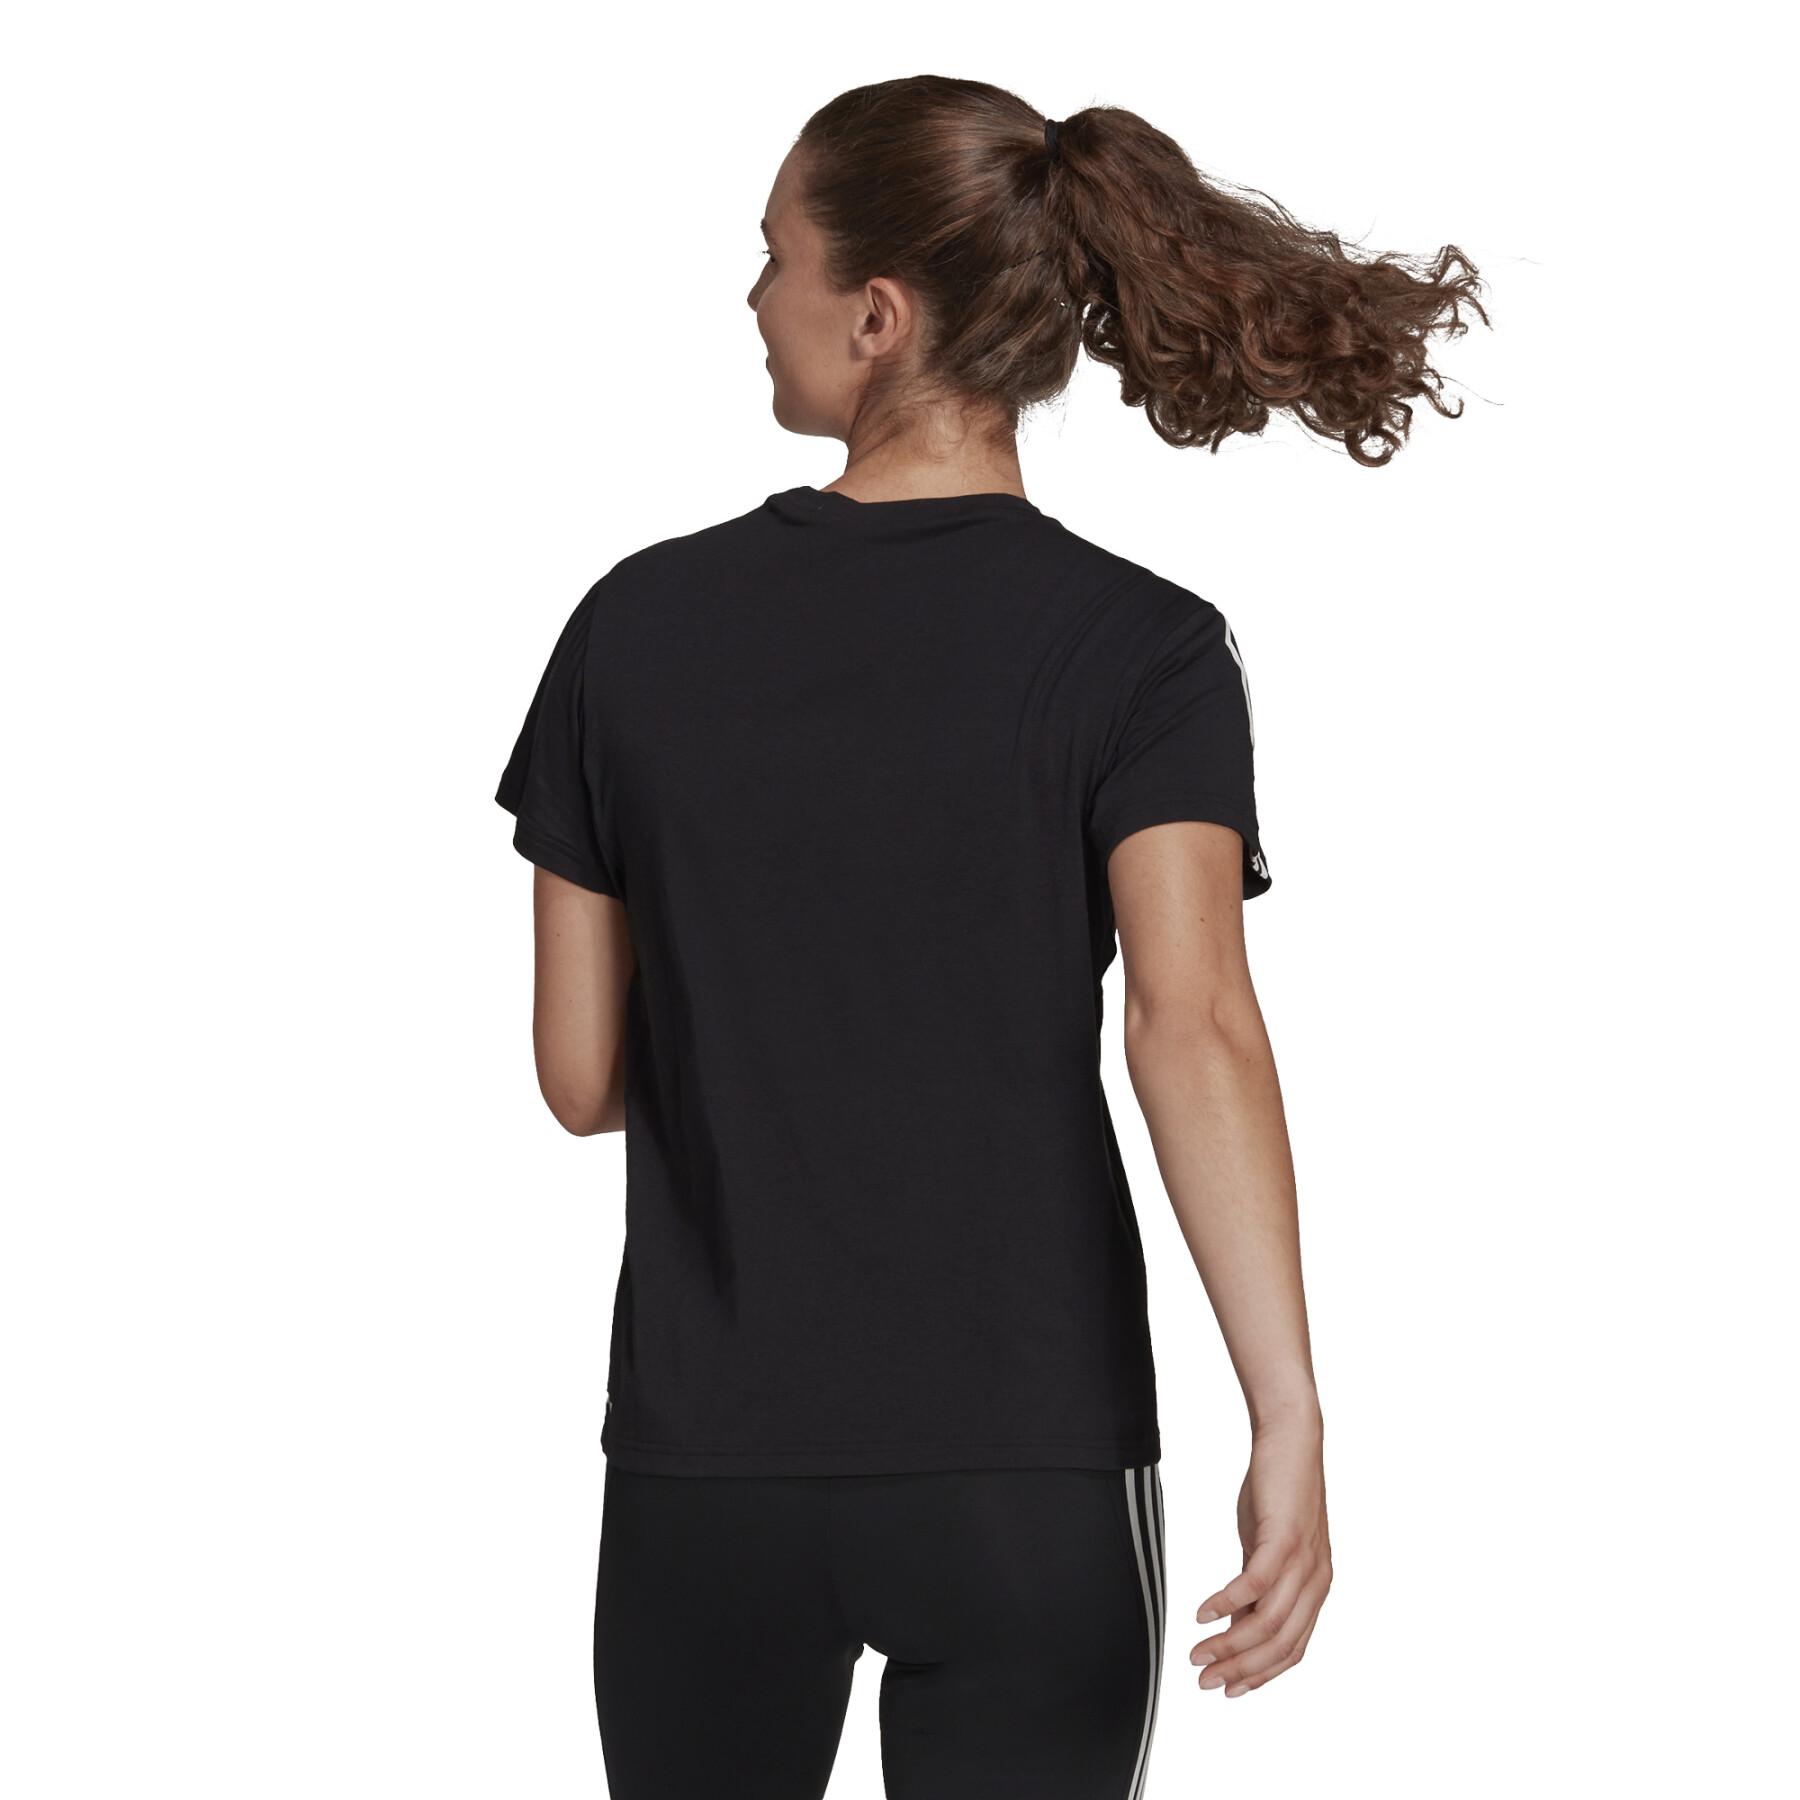 Camiseta de mujer adidas aeroready made for training cotton-touch